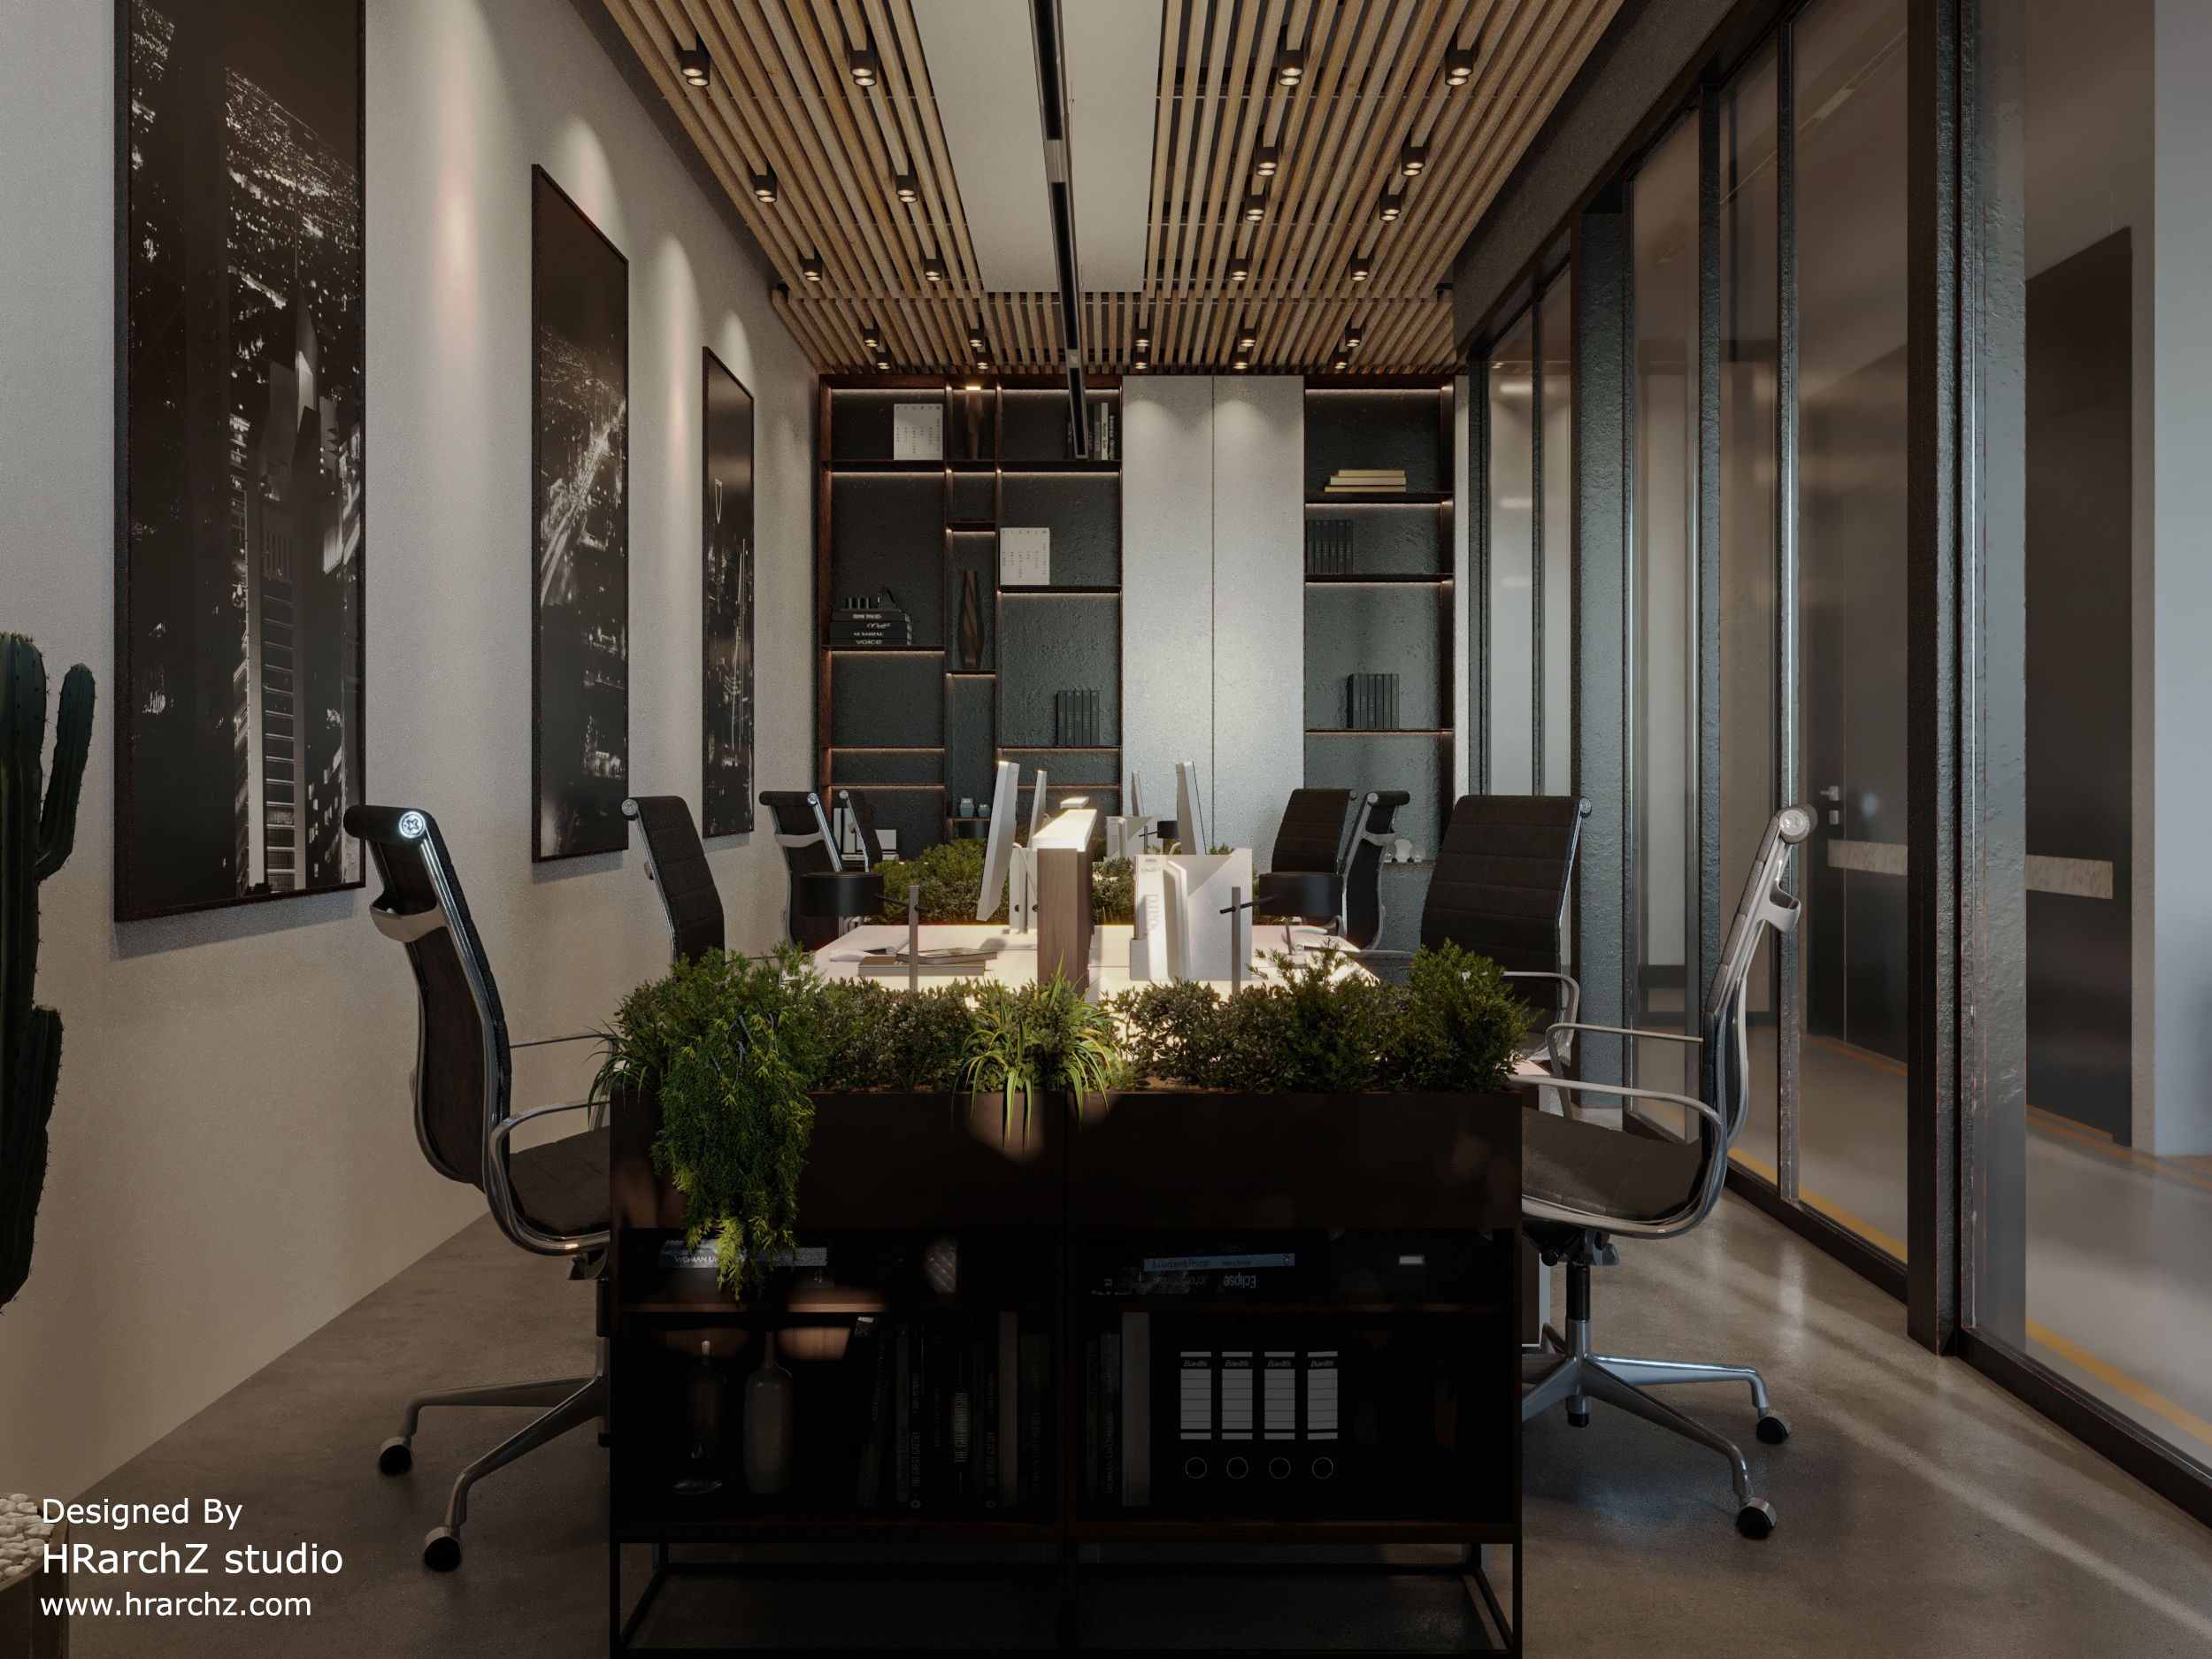 MAHAM COMPANY DESIGN - meeting room - wooden ceiling - modern design 